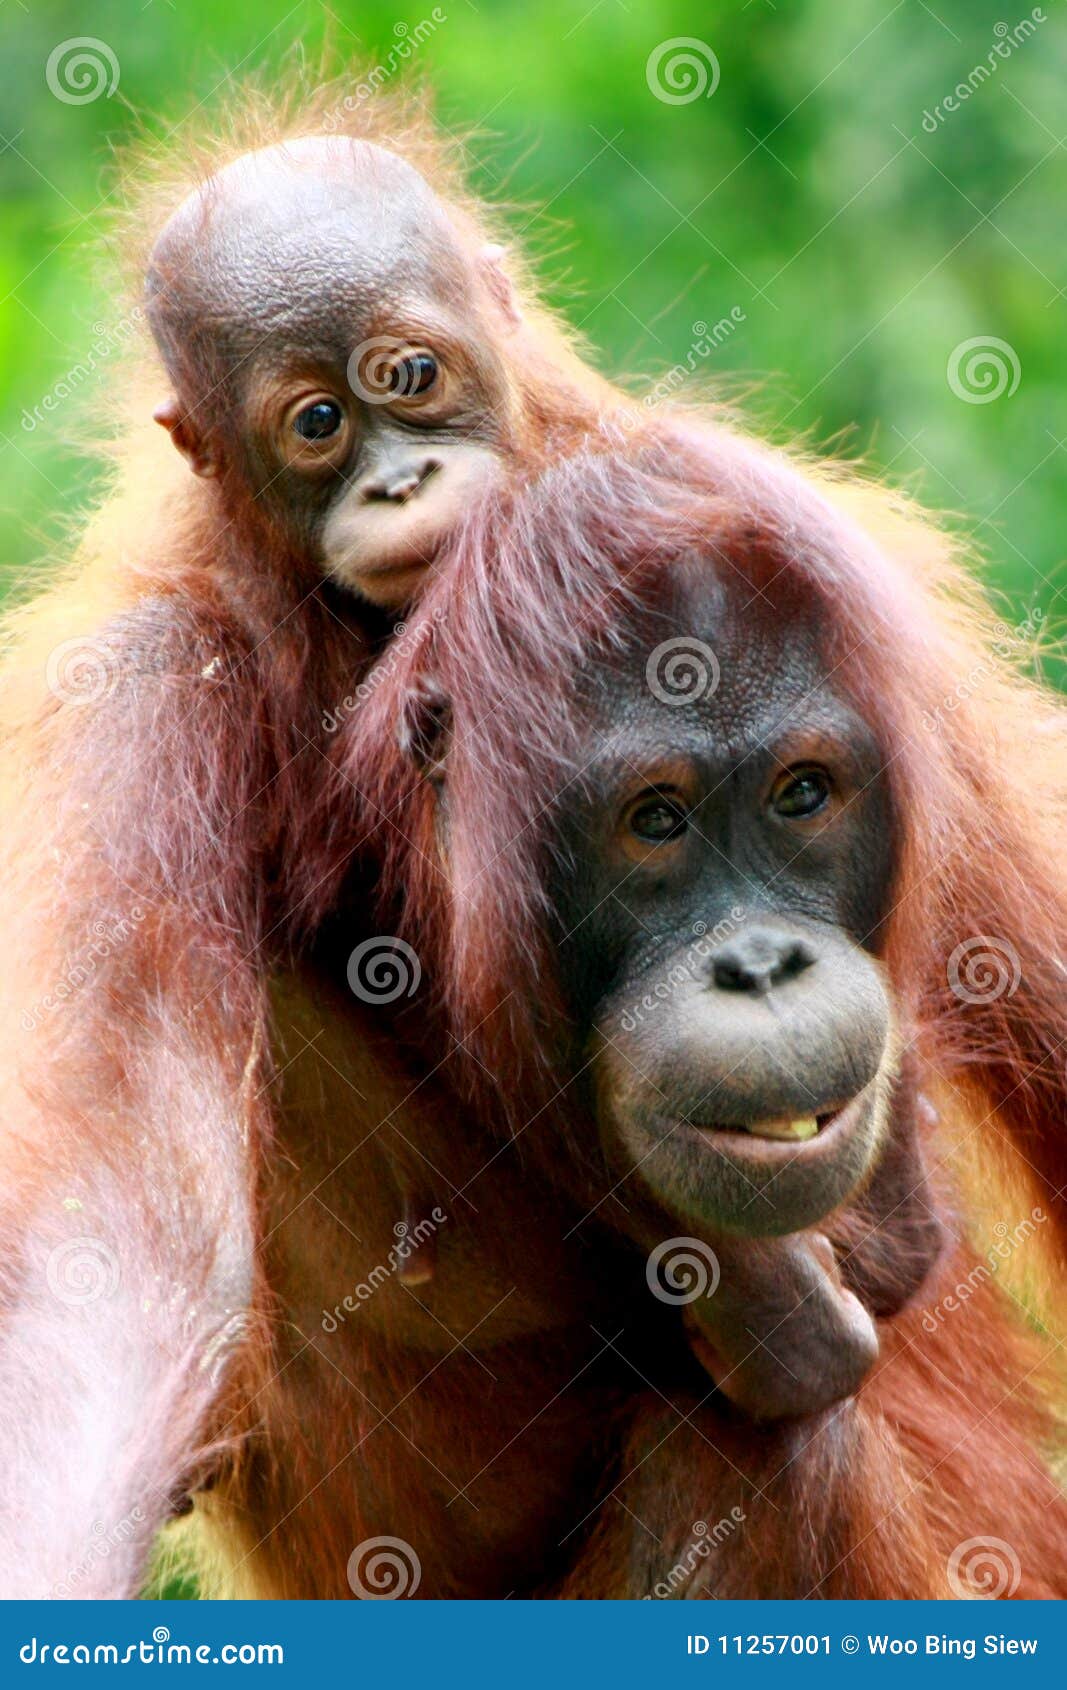 Ongekend Mother and baby Orang utan stock image. Image of nature - 11257001 TK-34